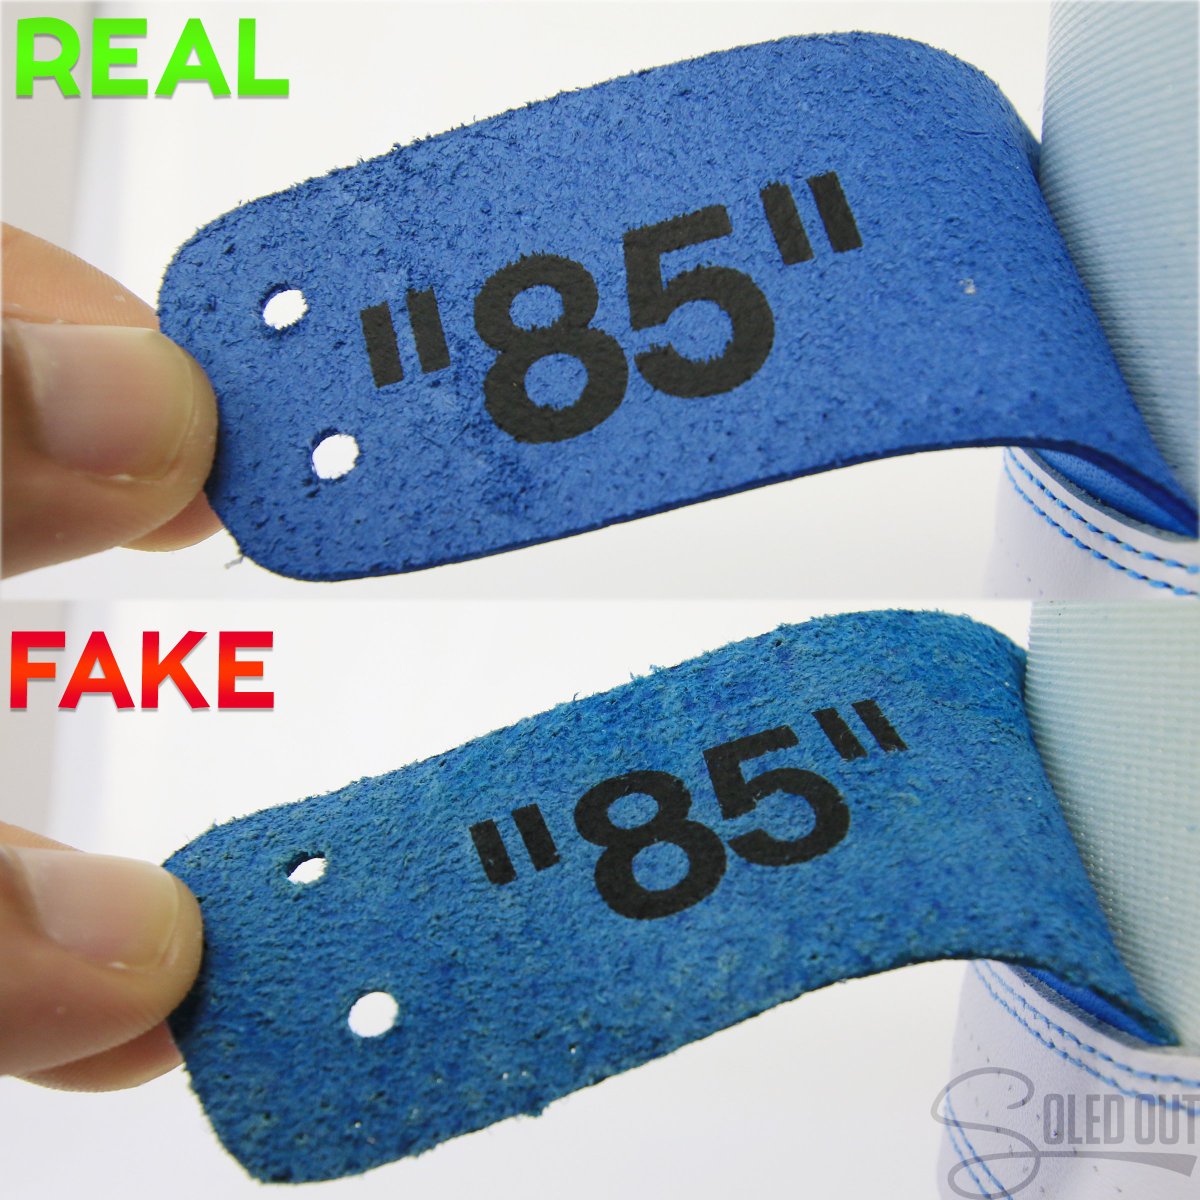 unc off white real vs fake